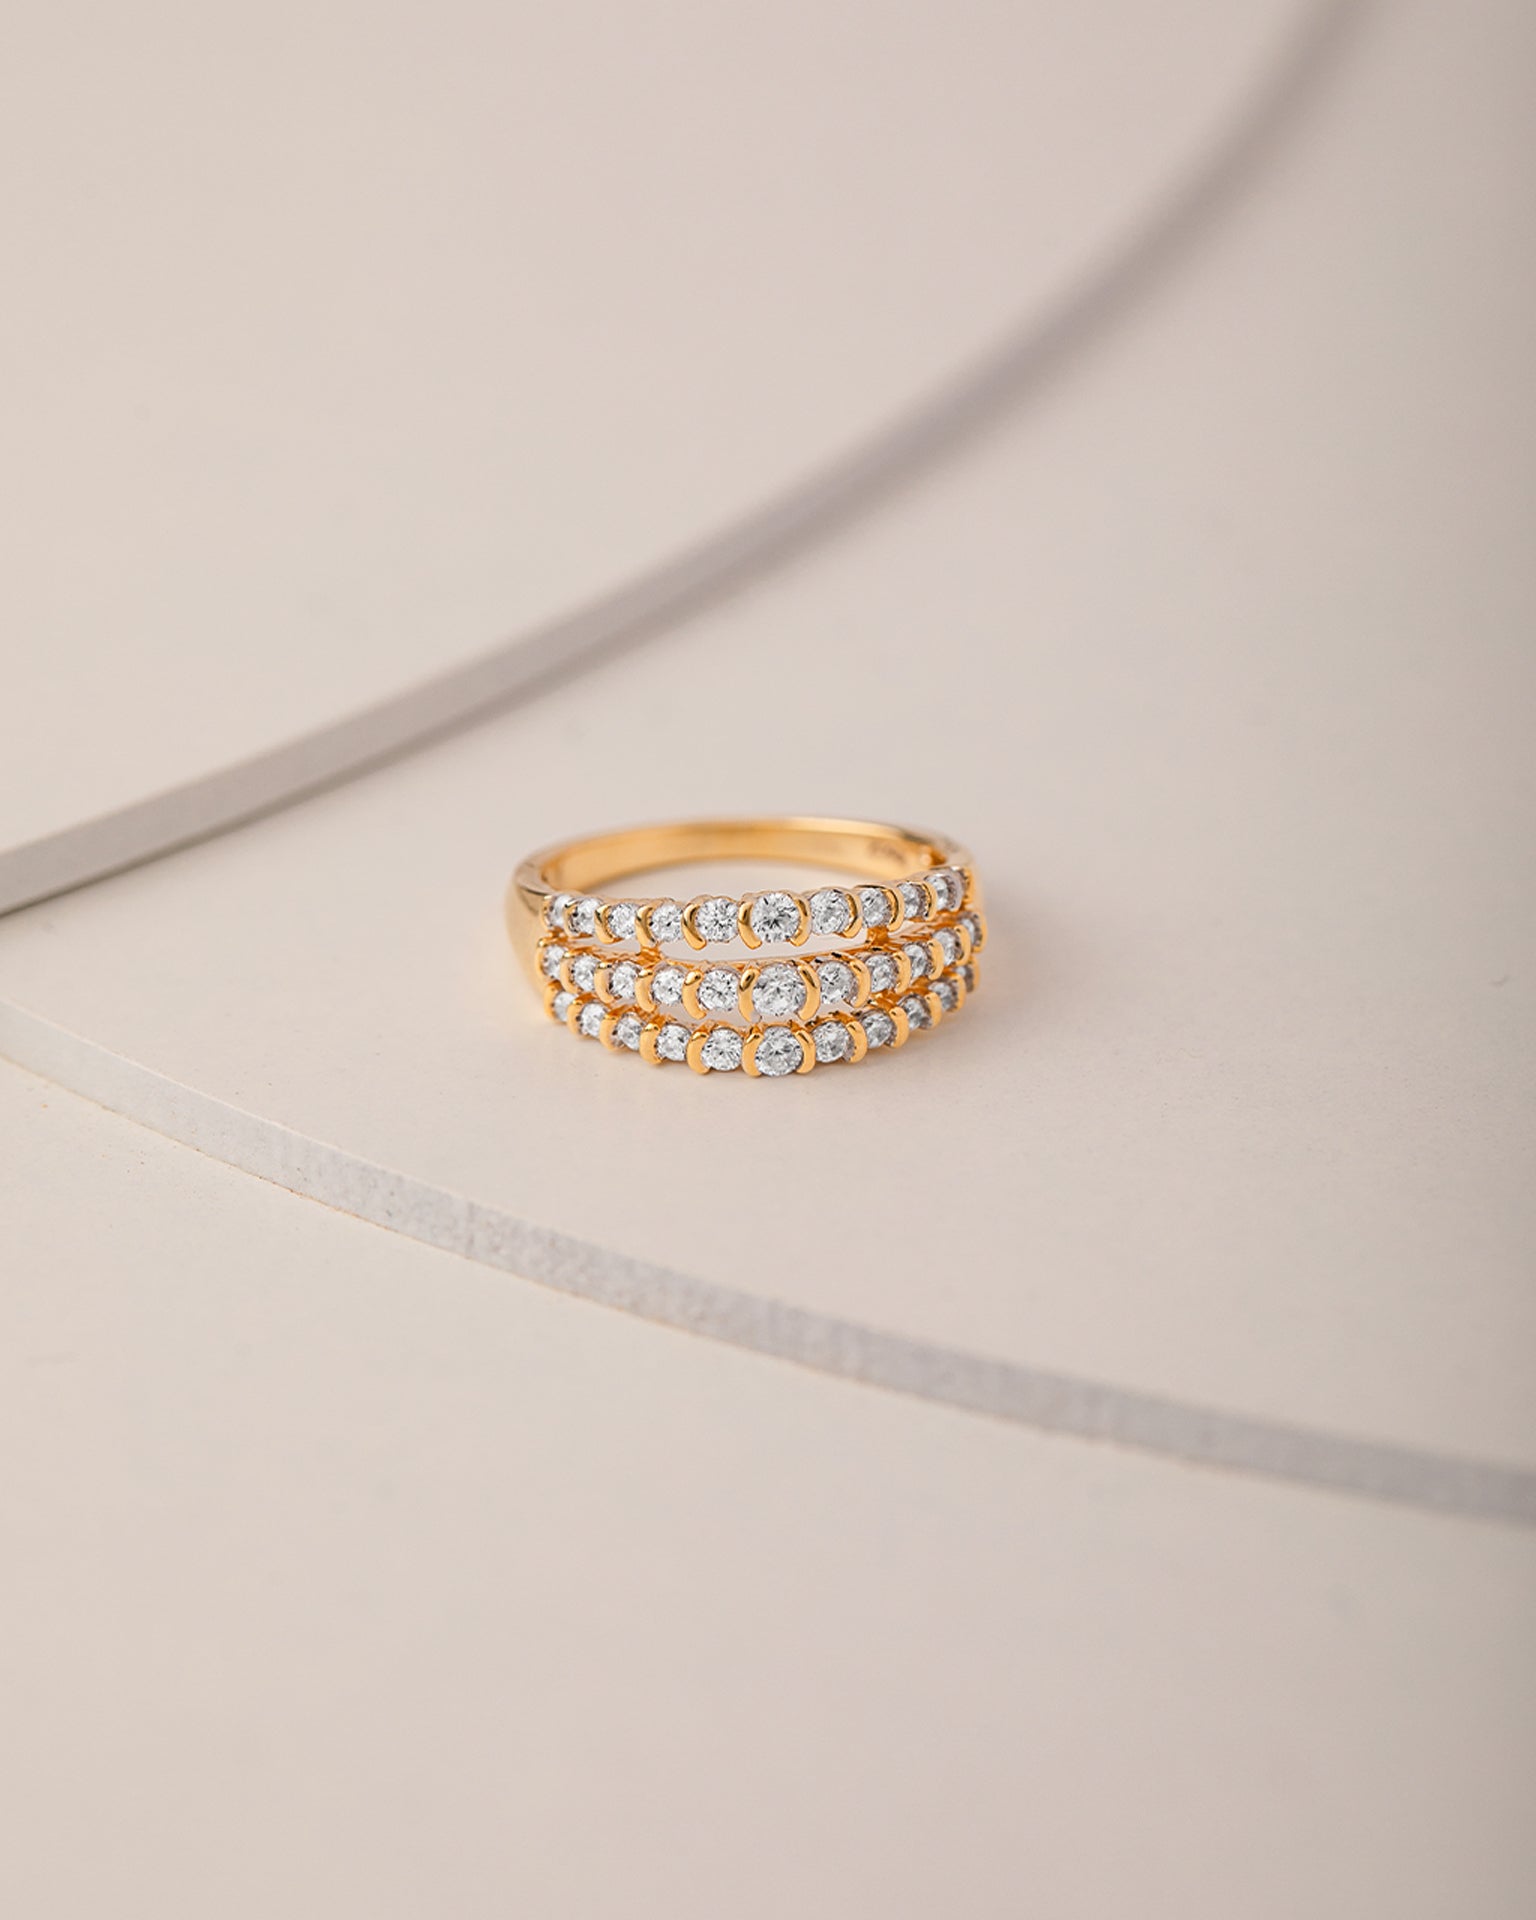 Stunning Three Row Diamond Ring